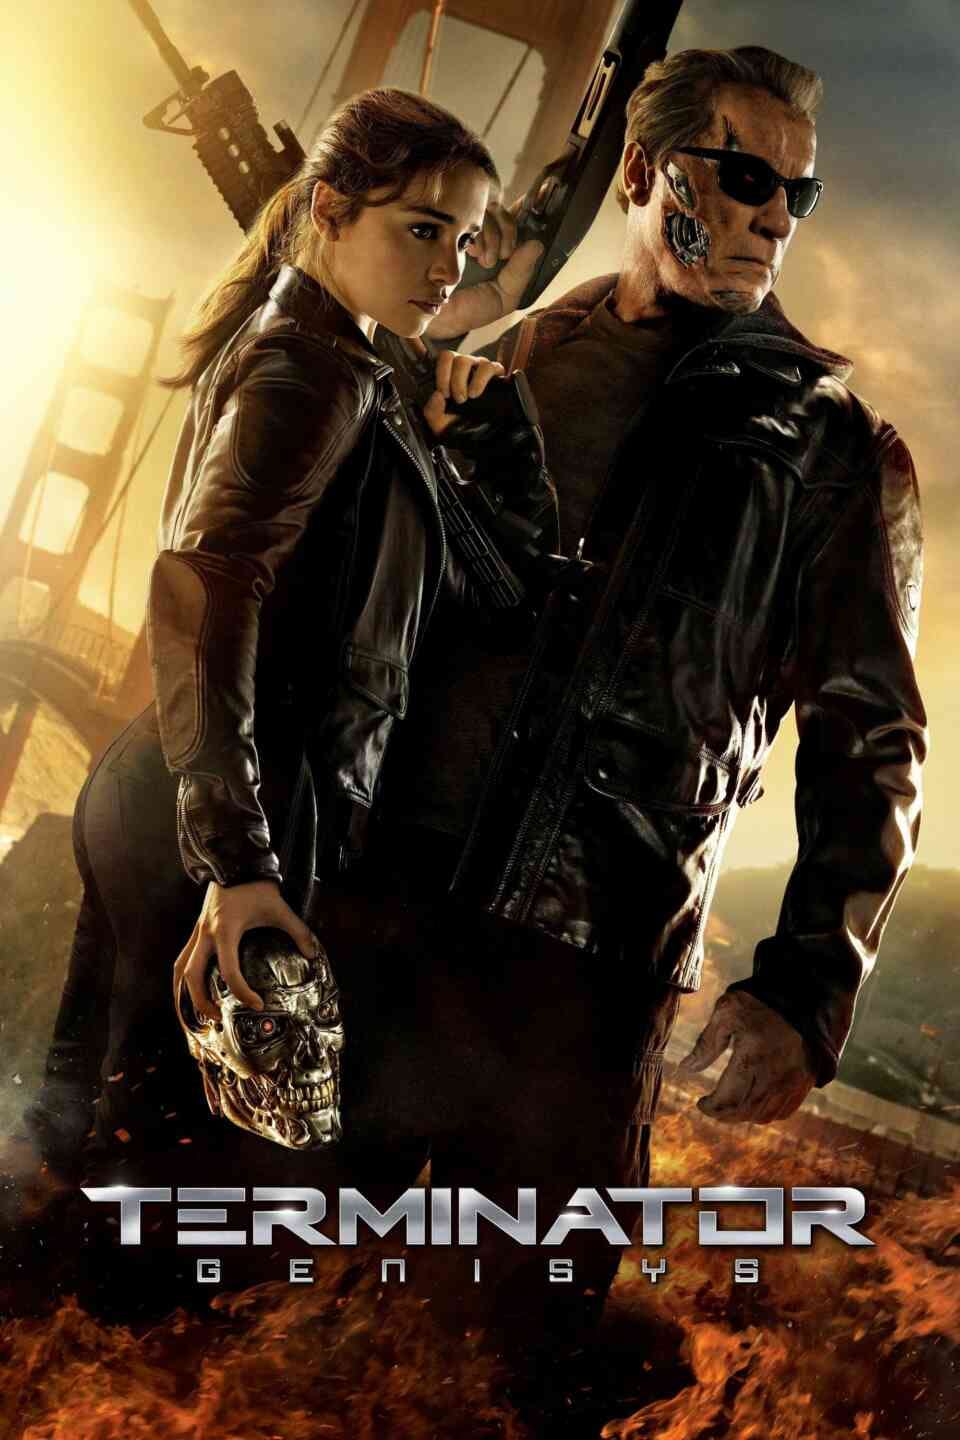 Read Terminator Genisys screenplay (poster)